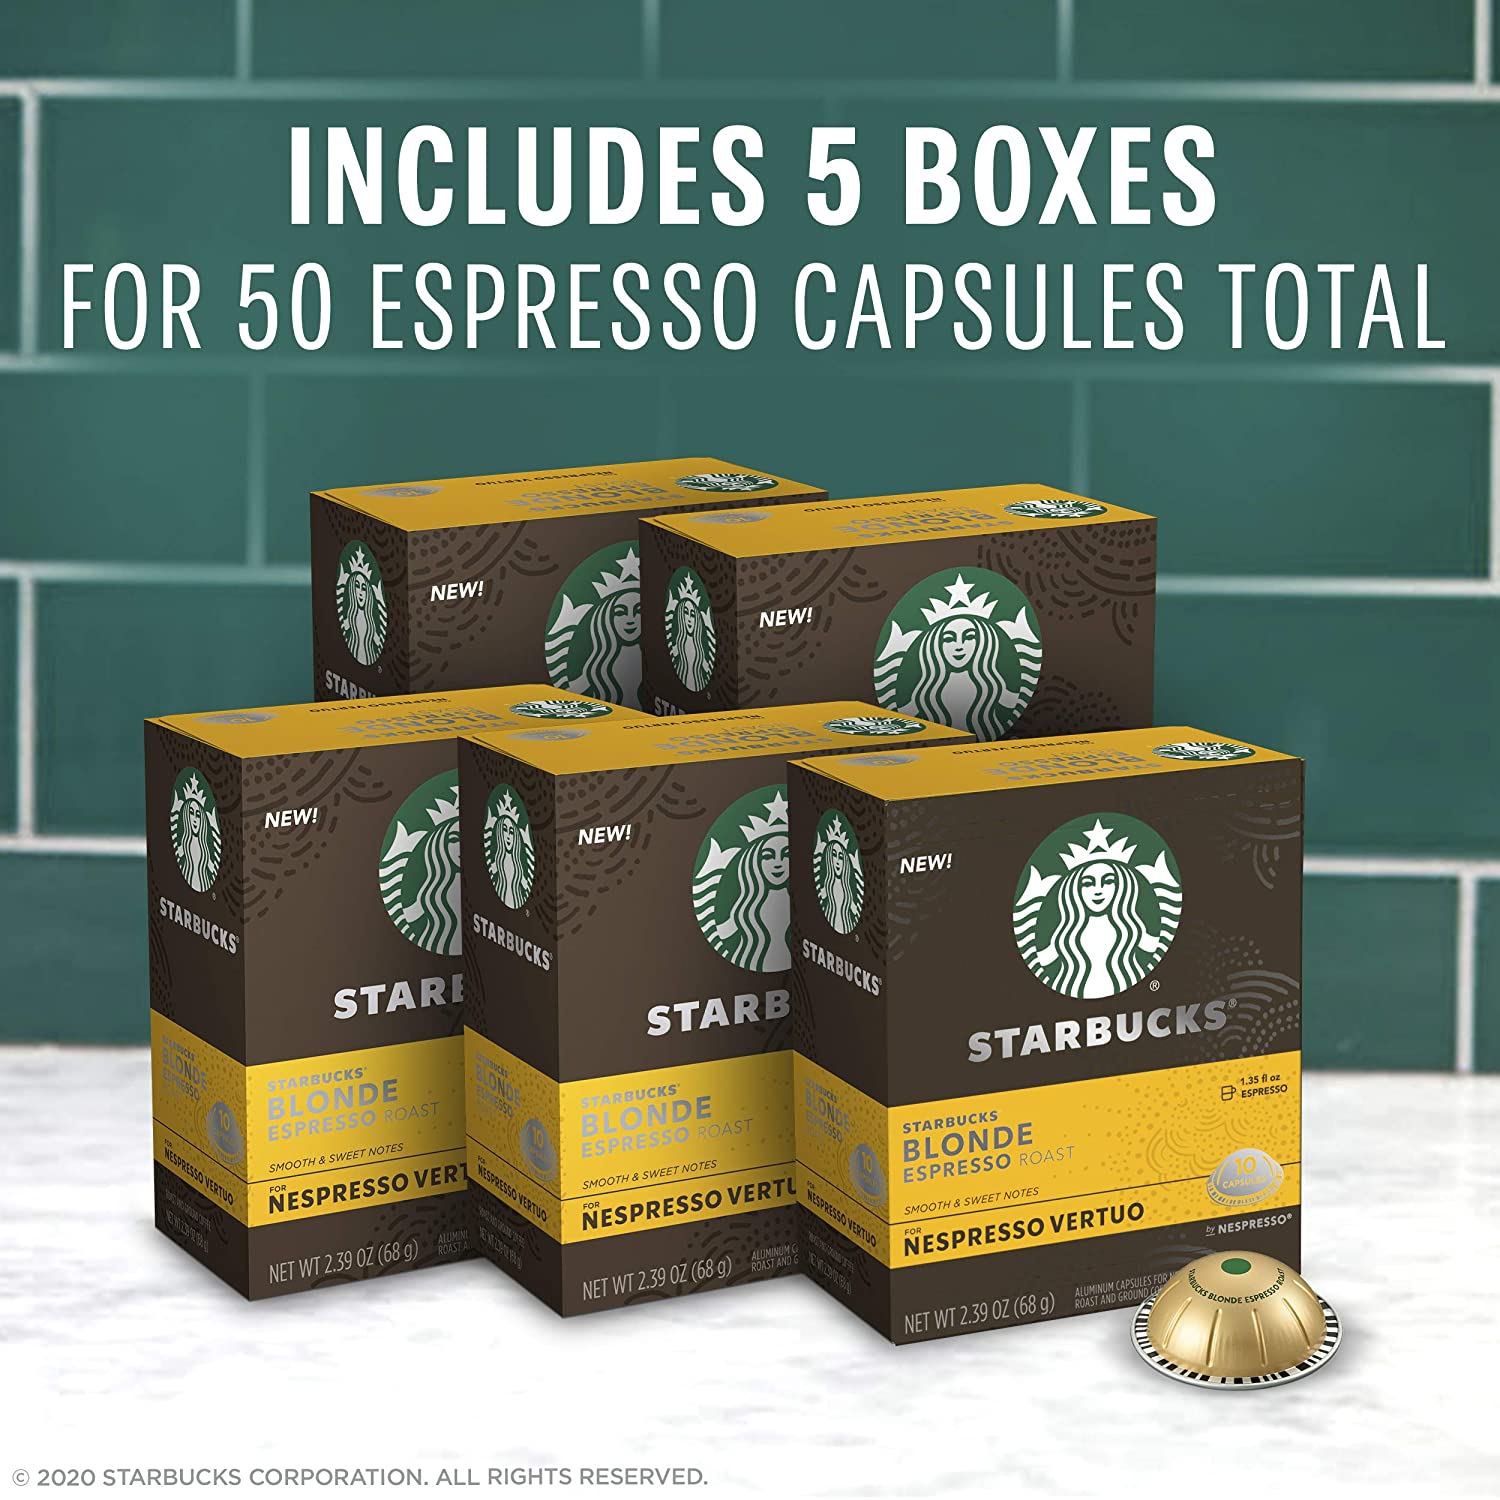 Espresso Roast Flavored Coffee  Starbucks® by Nespresso® for Vertuo